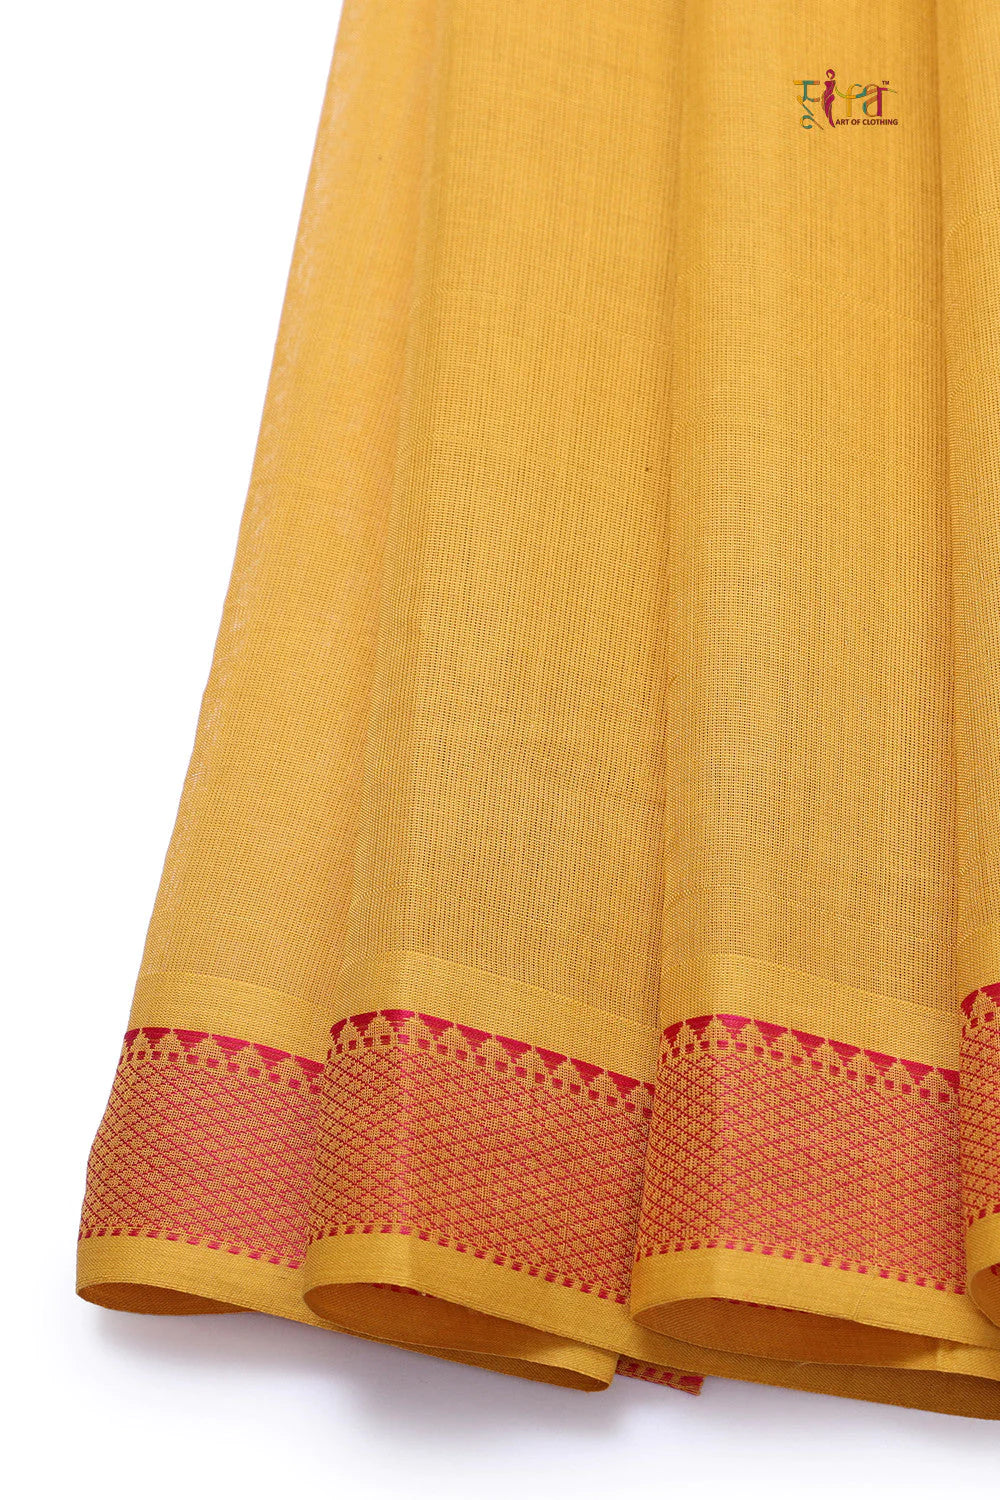 Handloom Sunglow Yellow Pure Cotton Kanchi saree